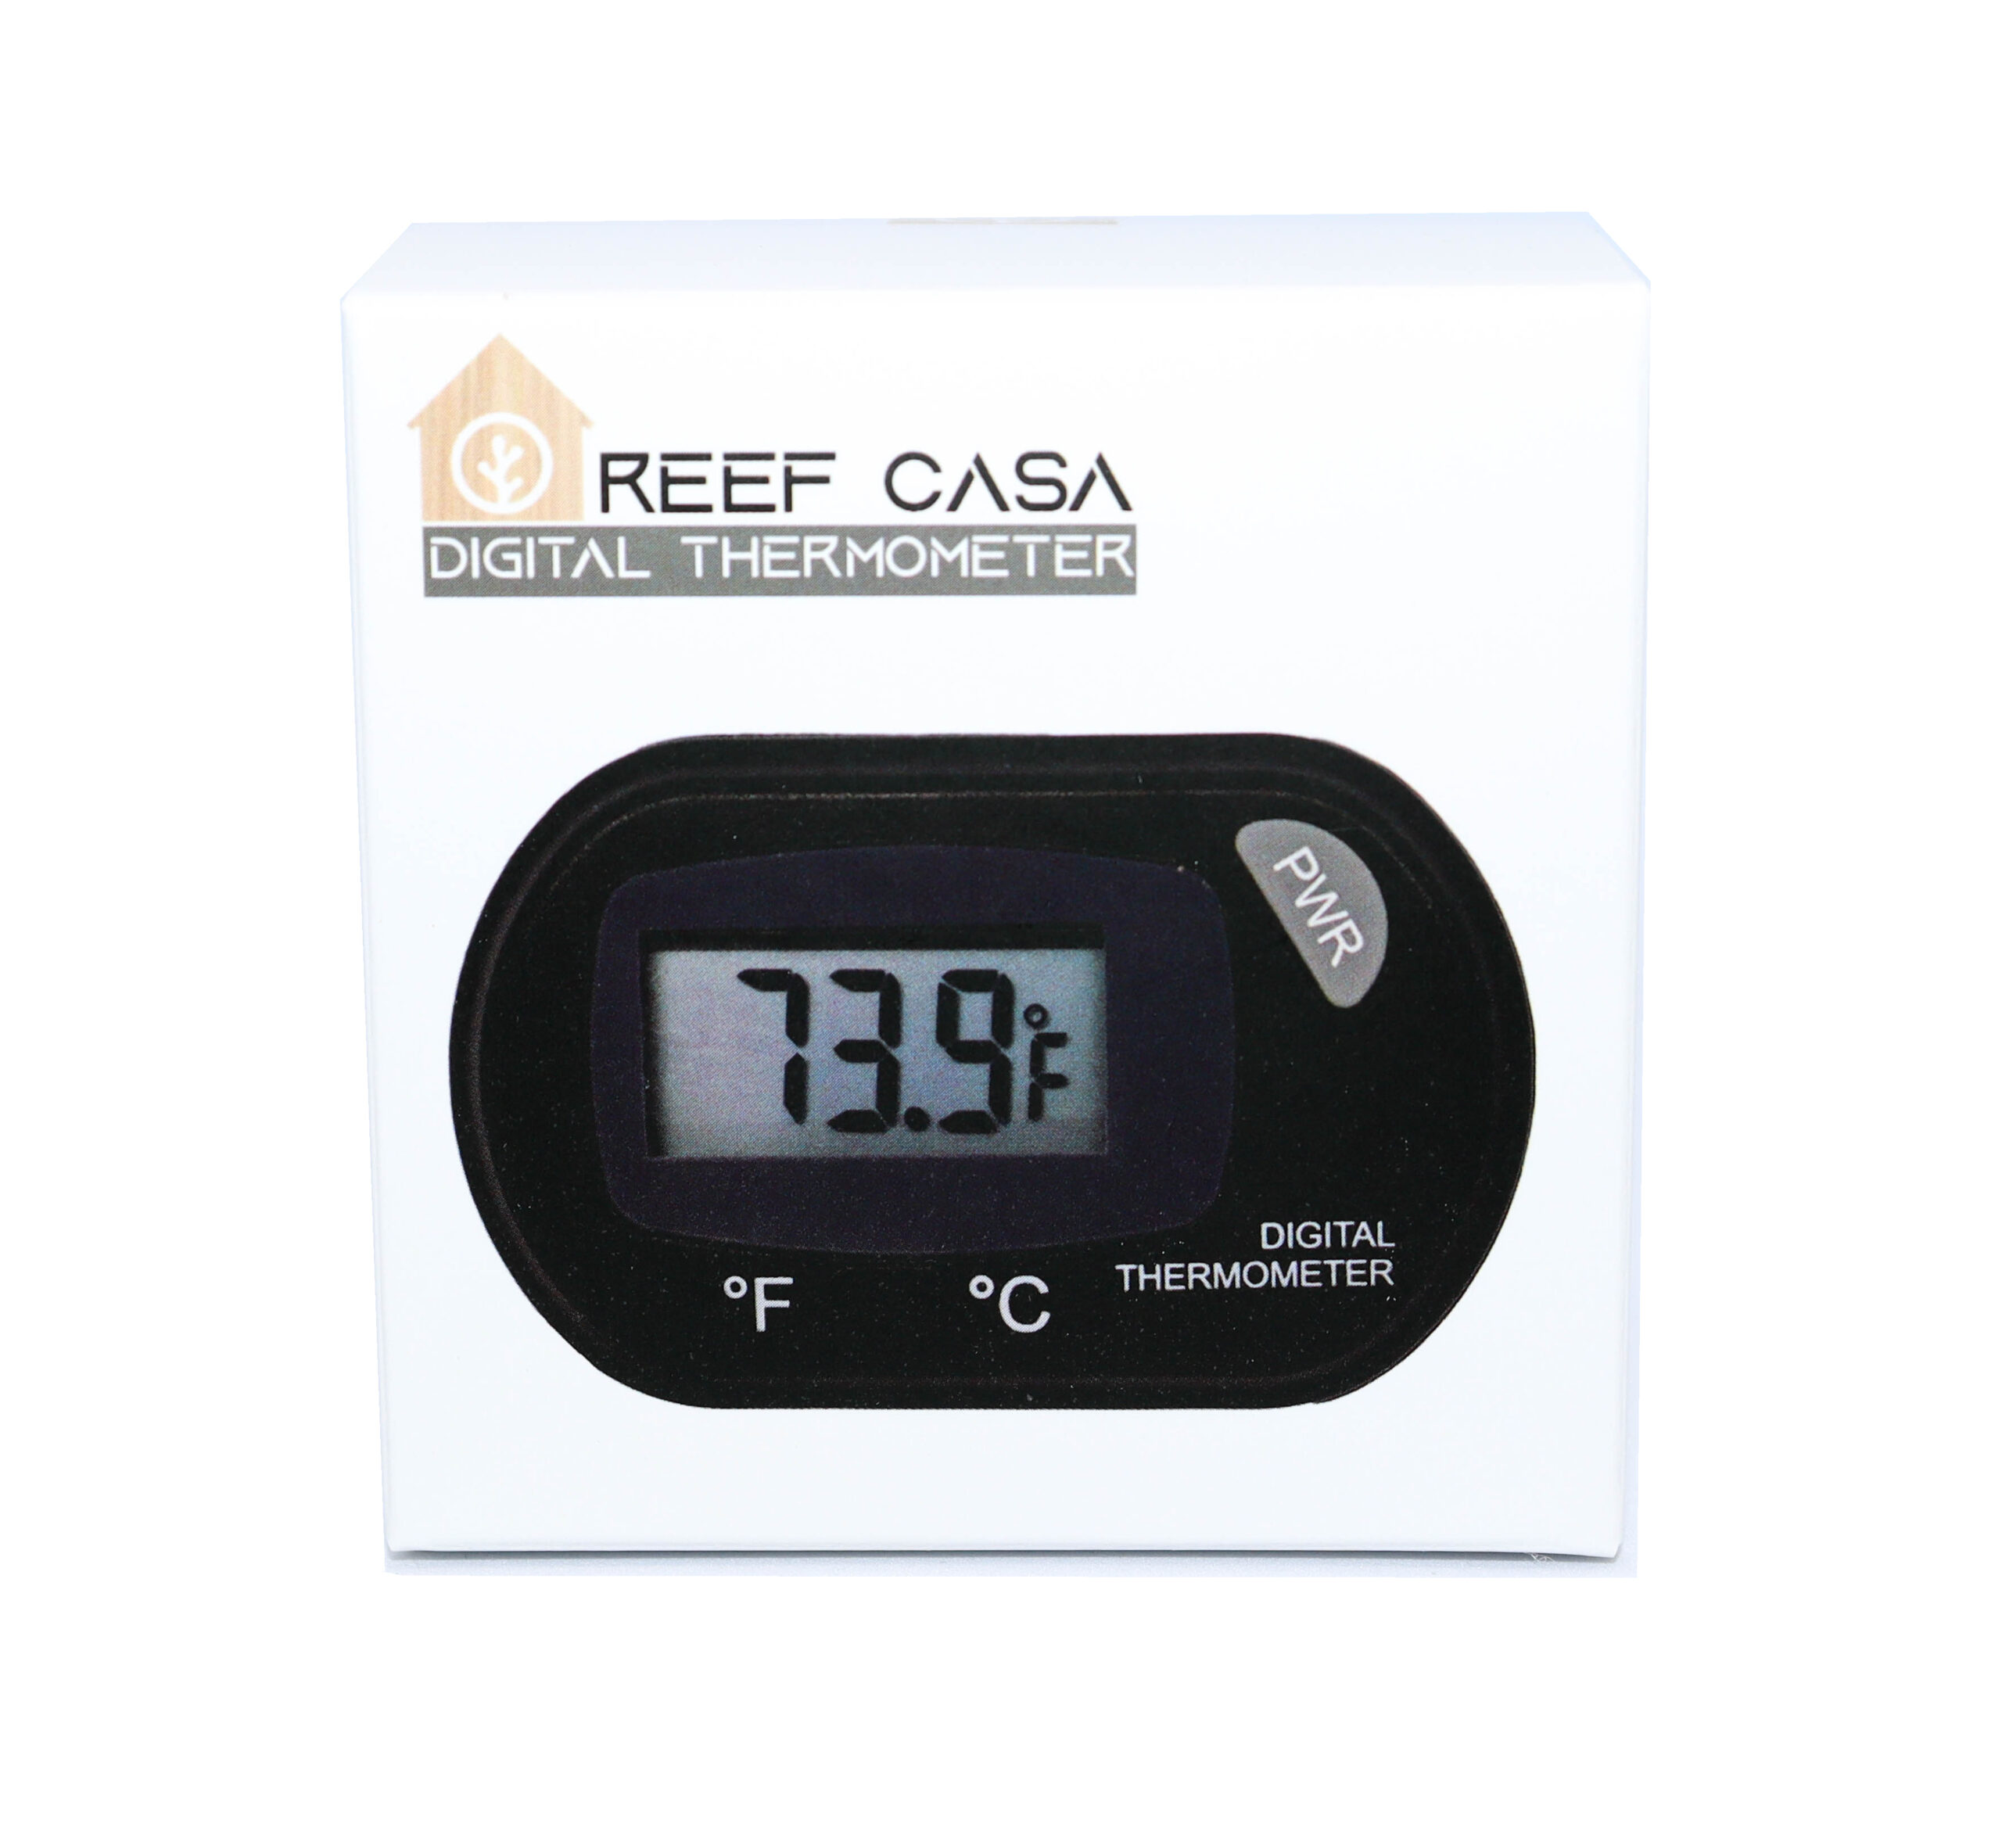 Digital Thermometer - Casa